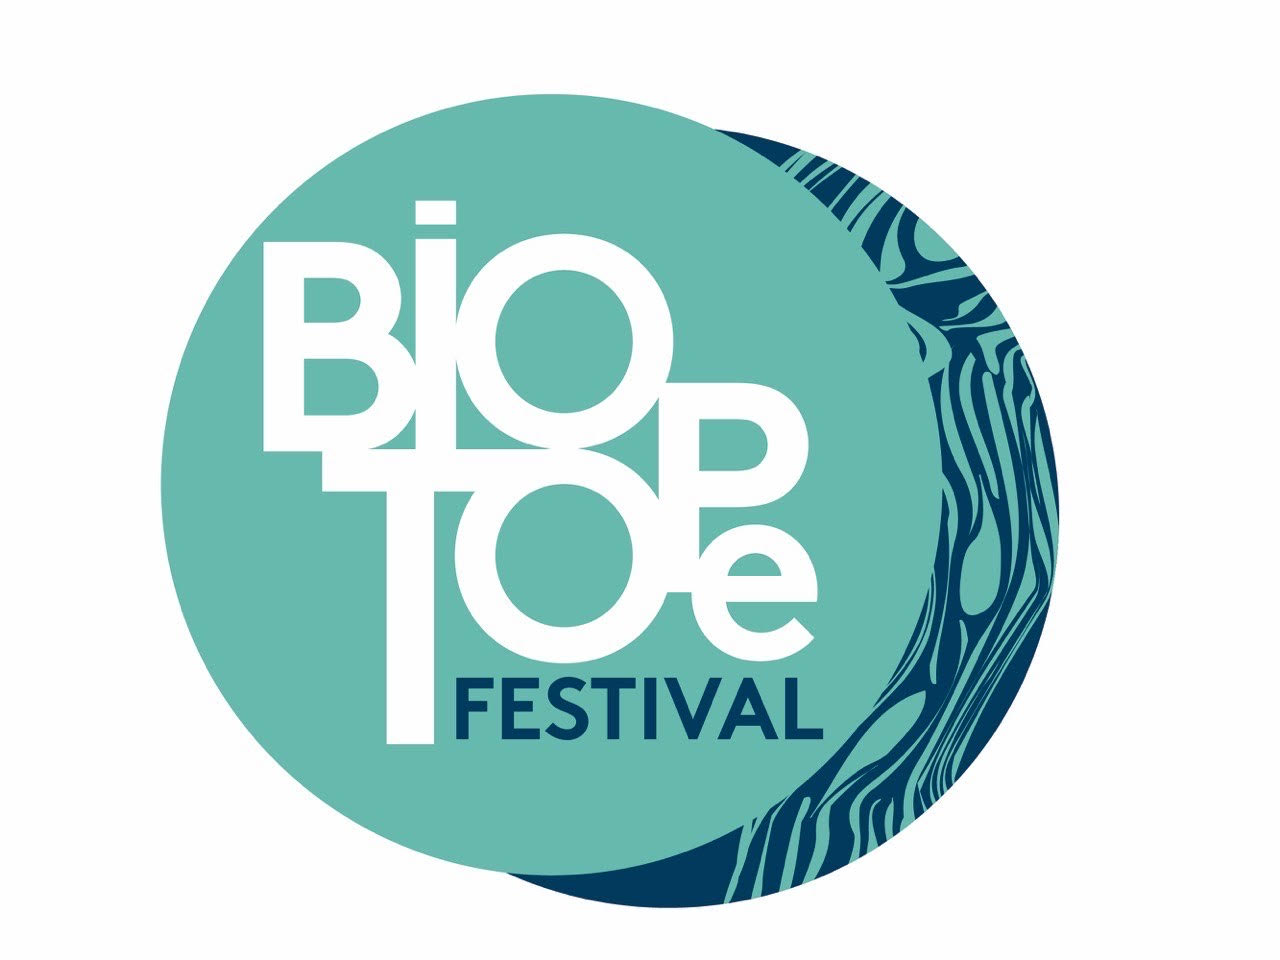 Biotope Festival